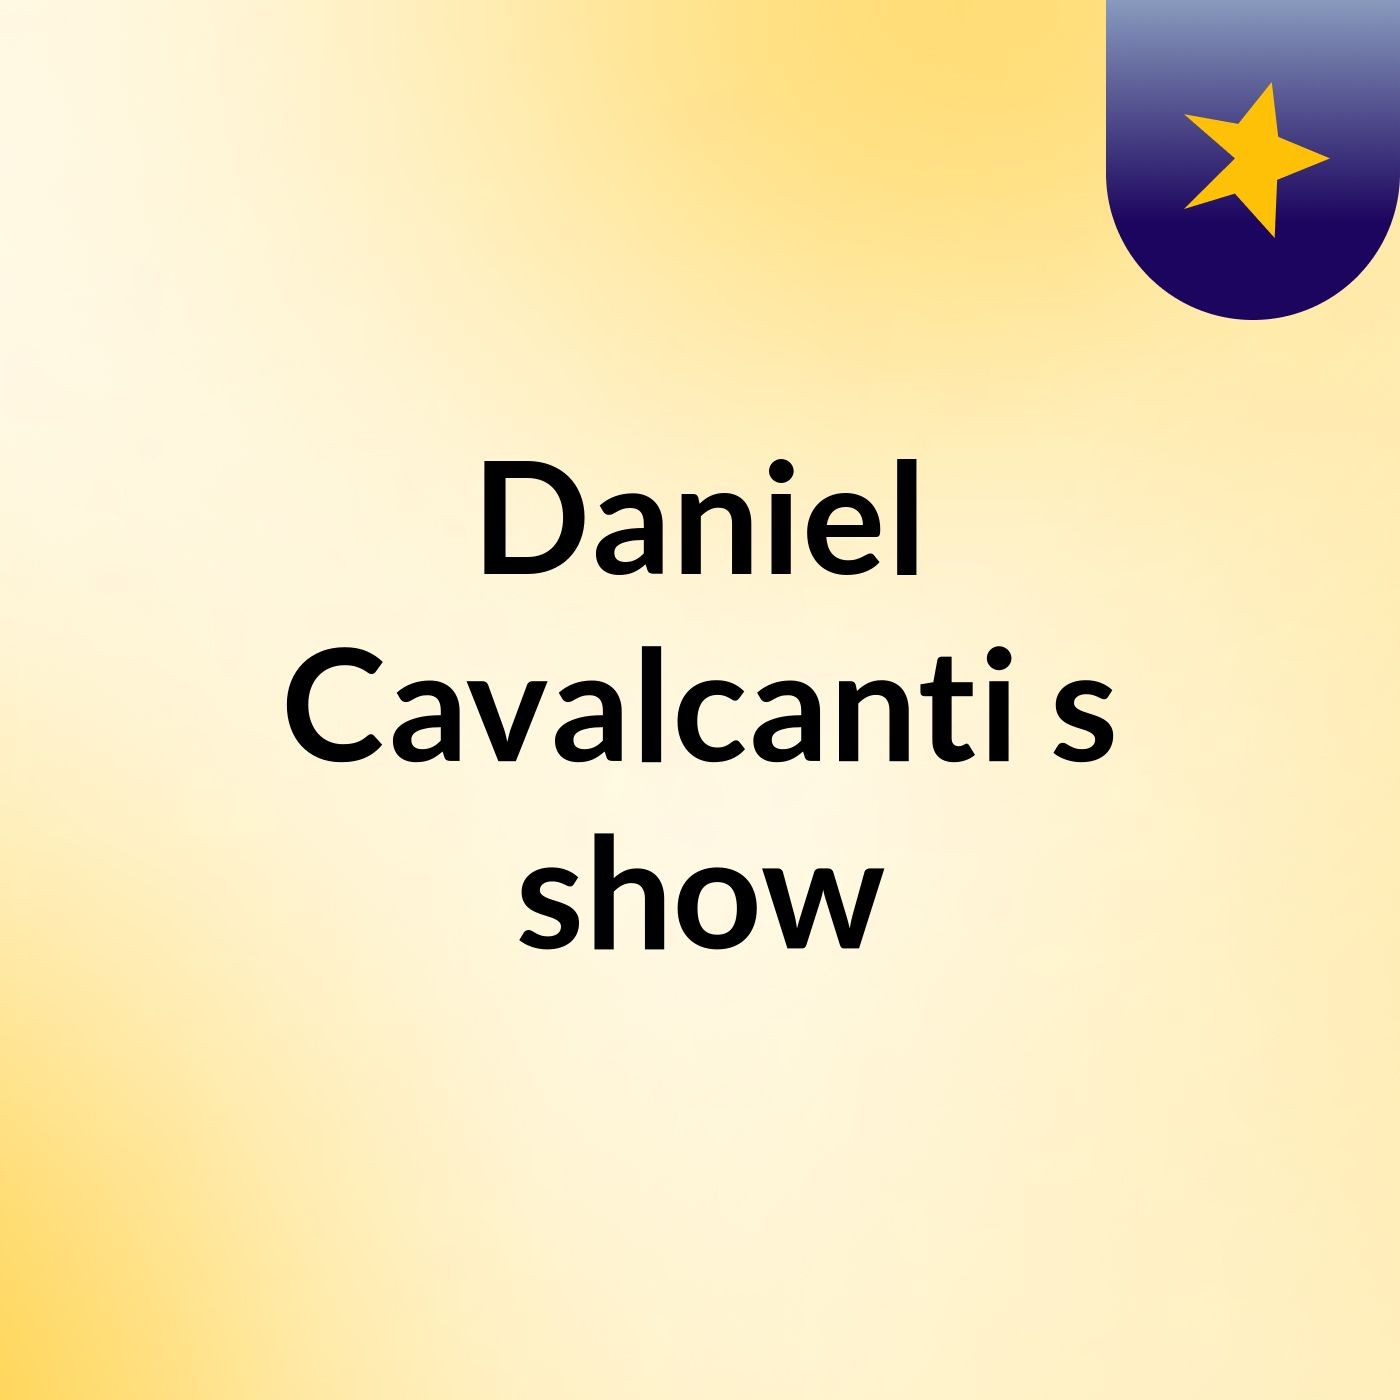 Daniel Cavalcanti's show